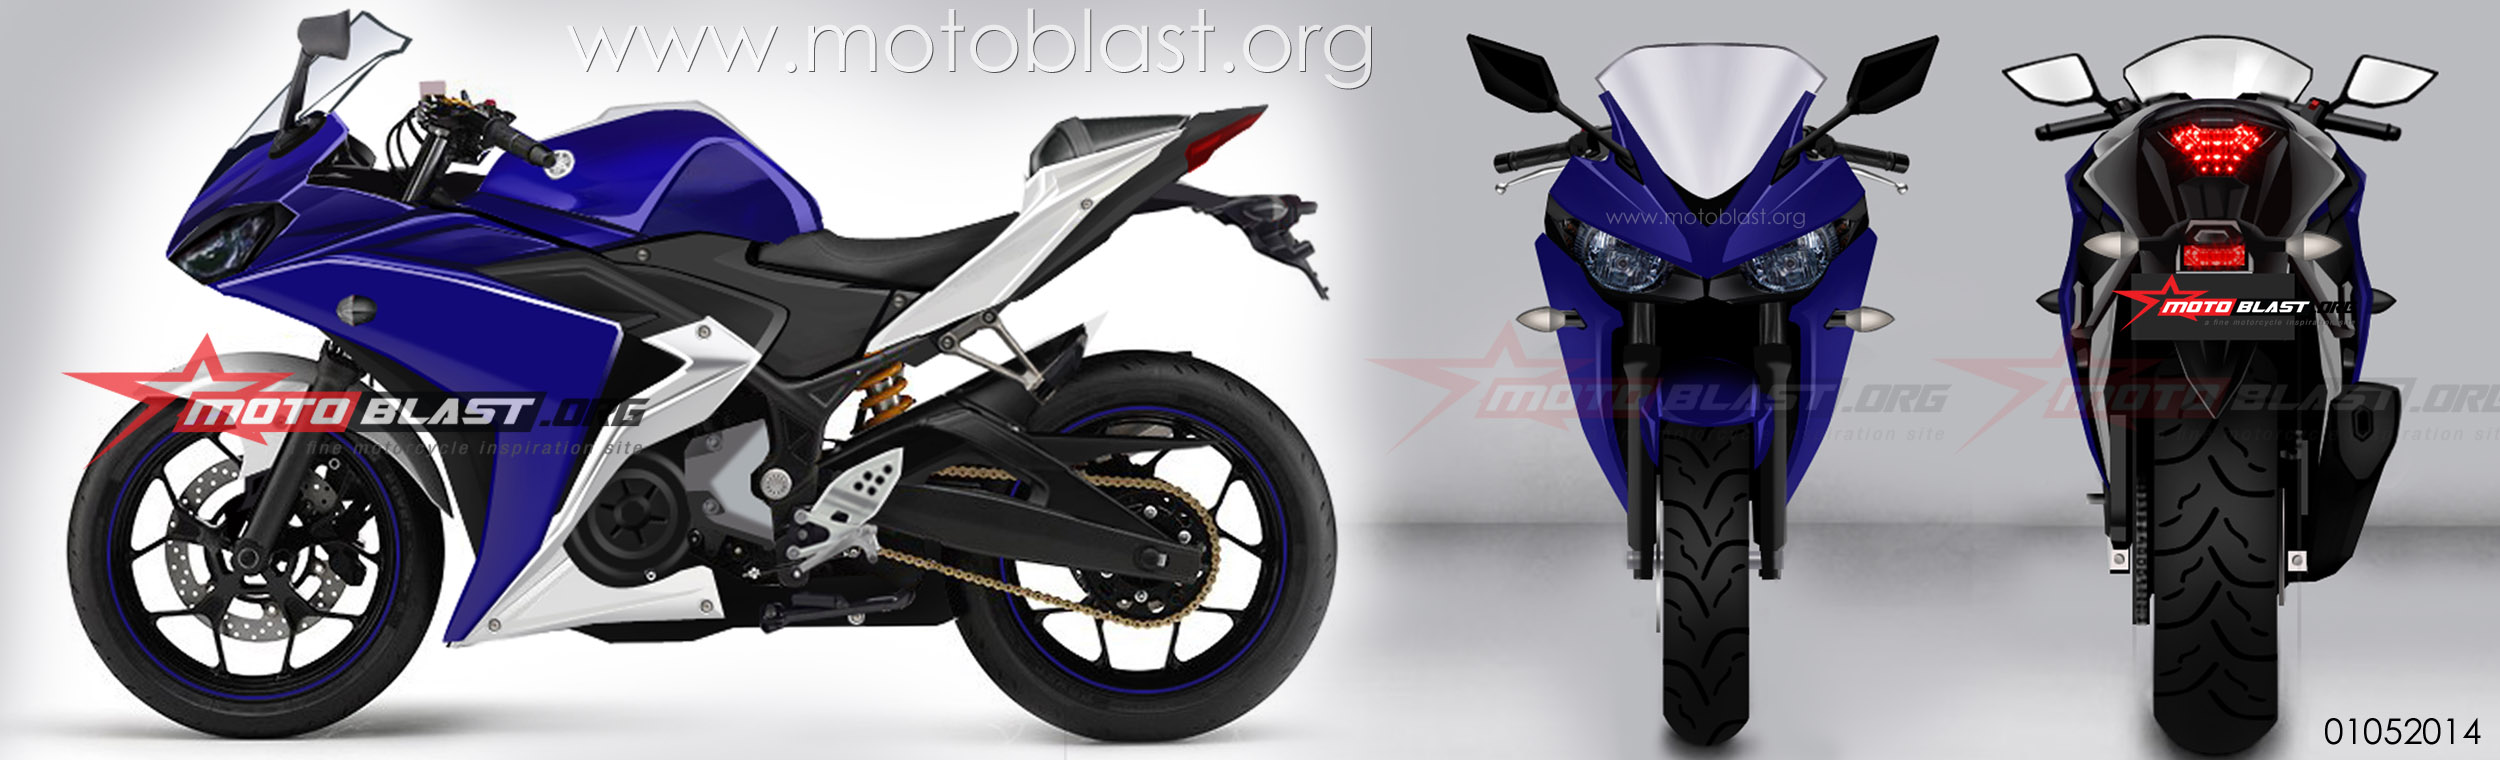 Yamaha Juga Menyediakan Racing Kit Untuk Yamaha Yzf R25 MOTOBLAST